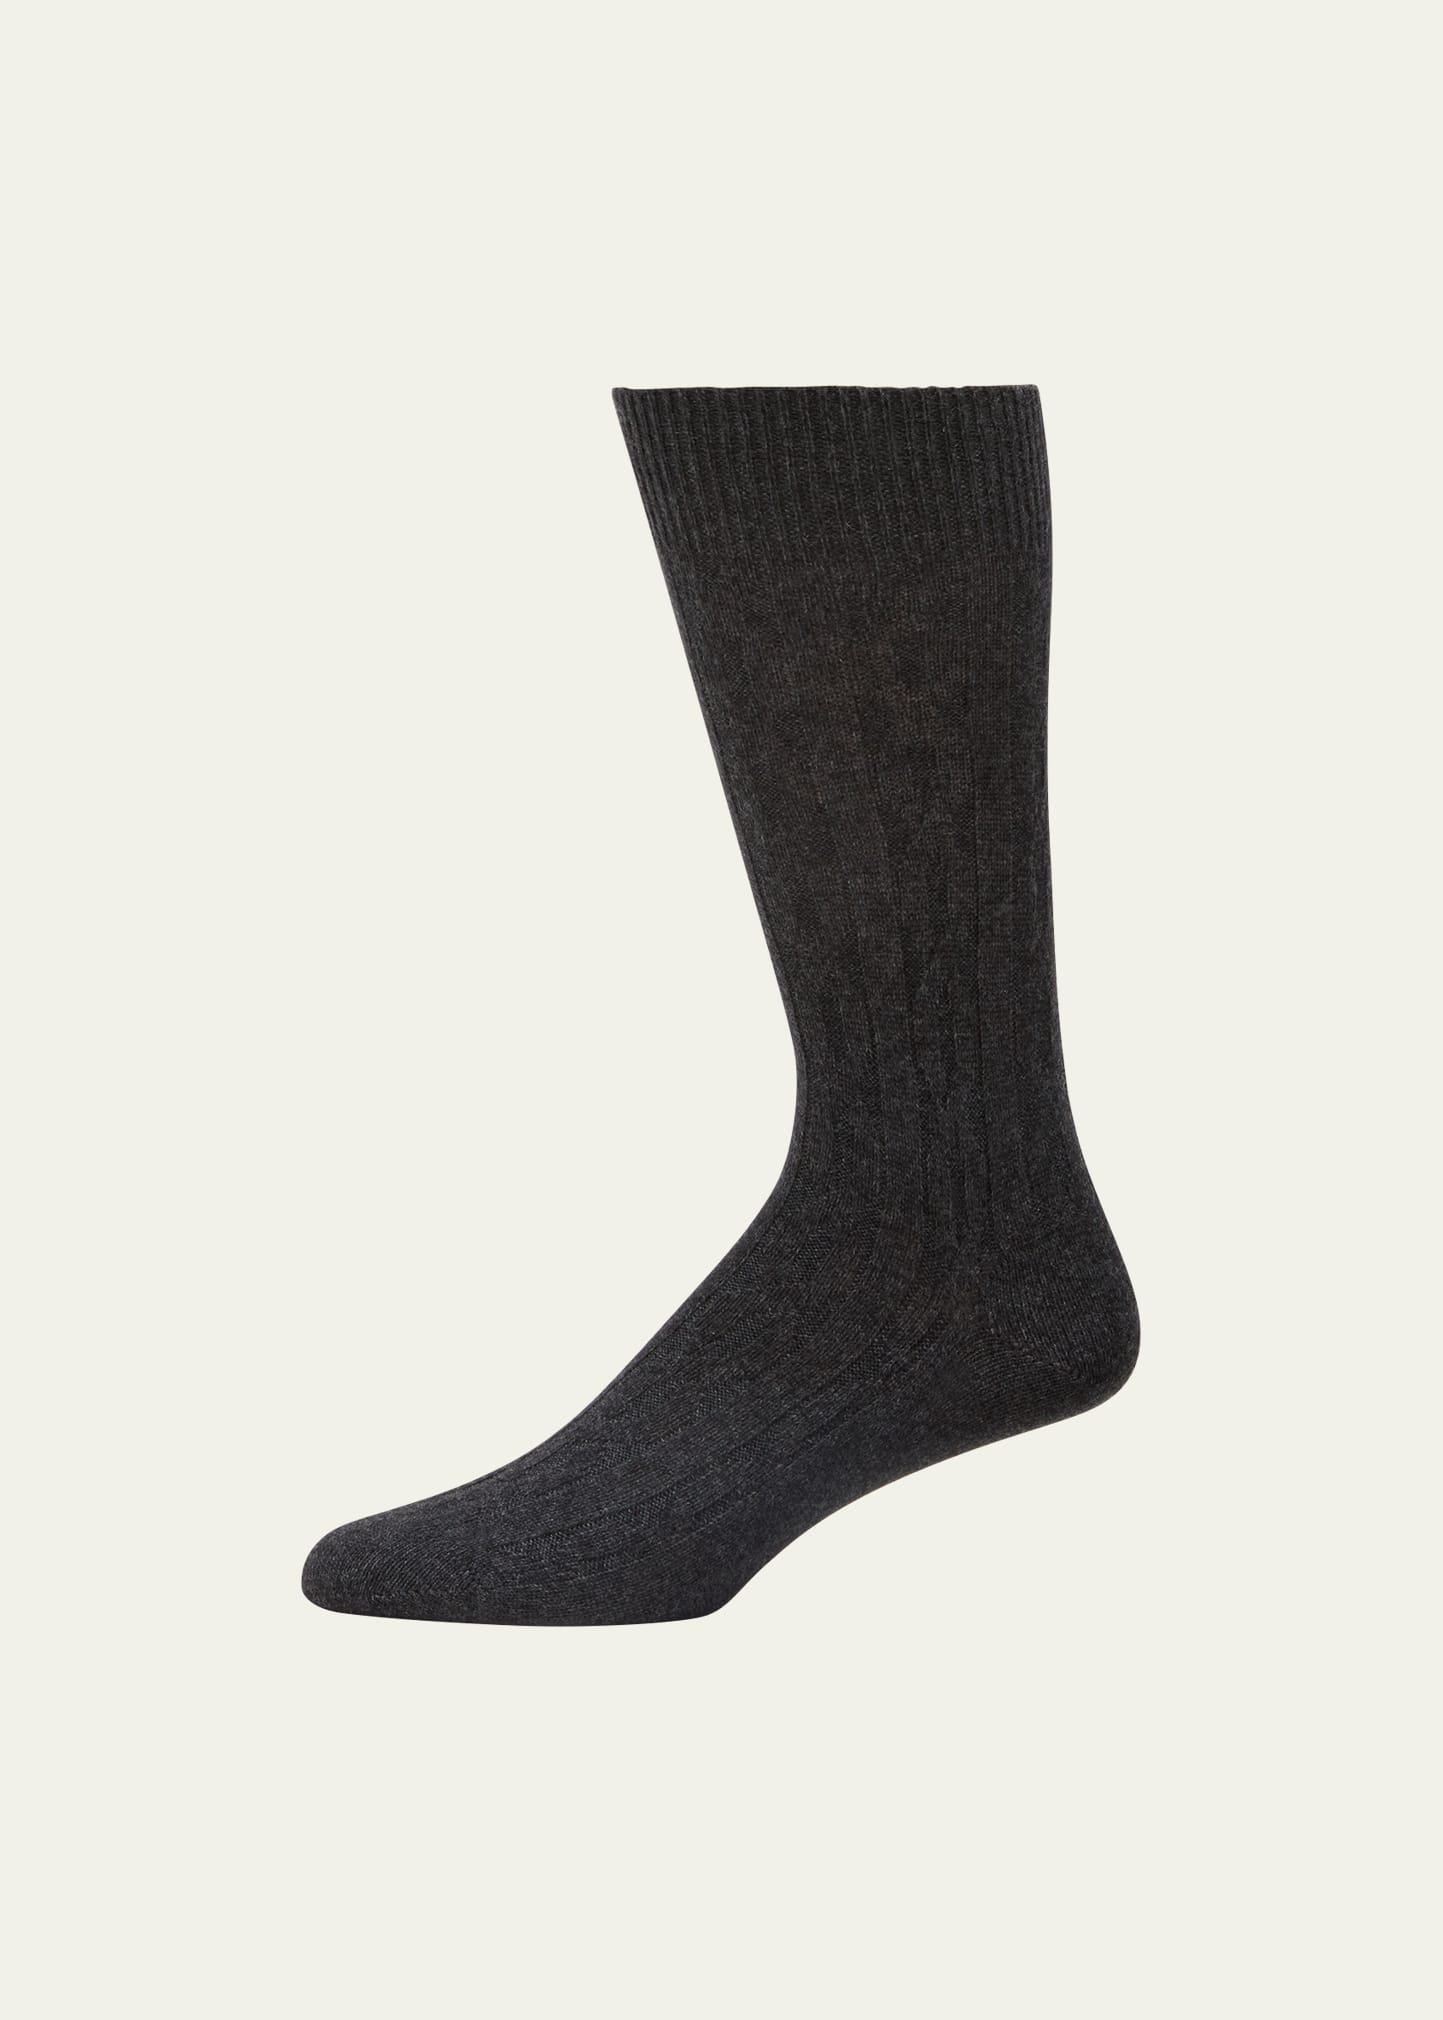 Men's Cashmere Cable Knit Mid-Calf Socks